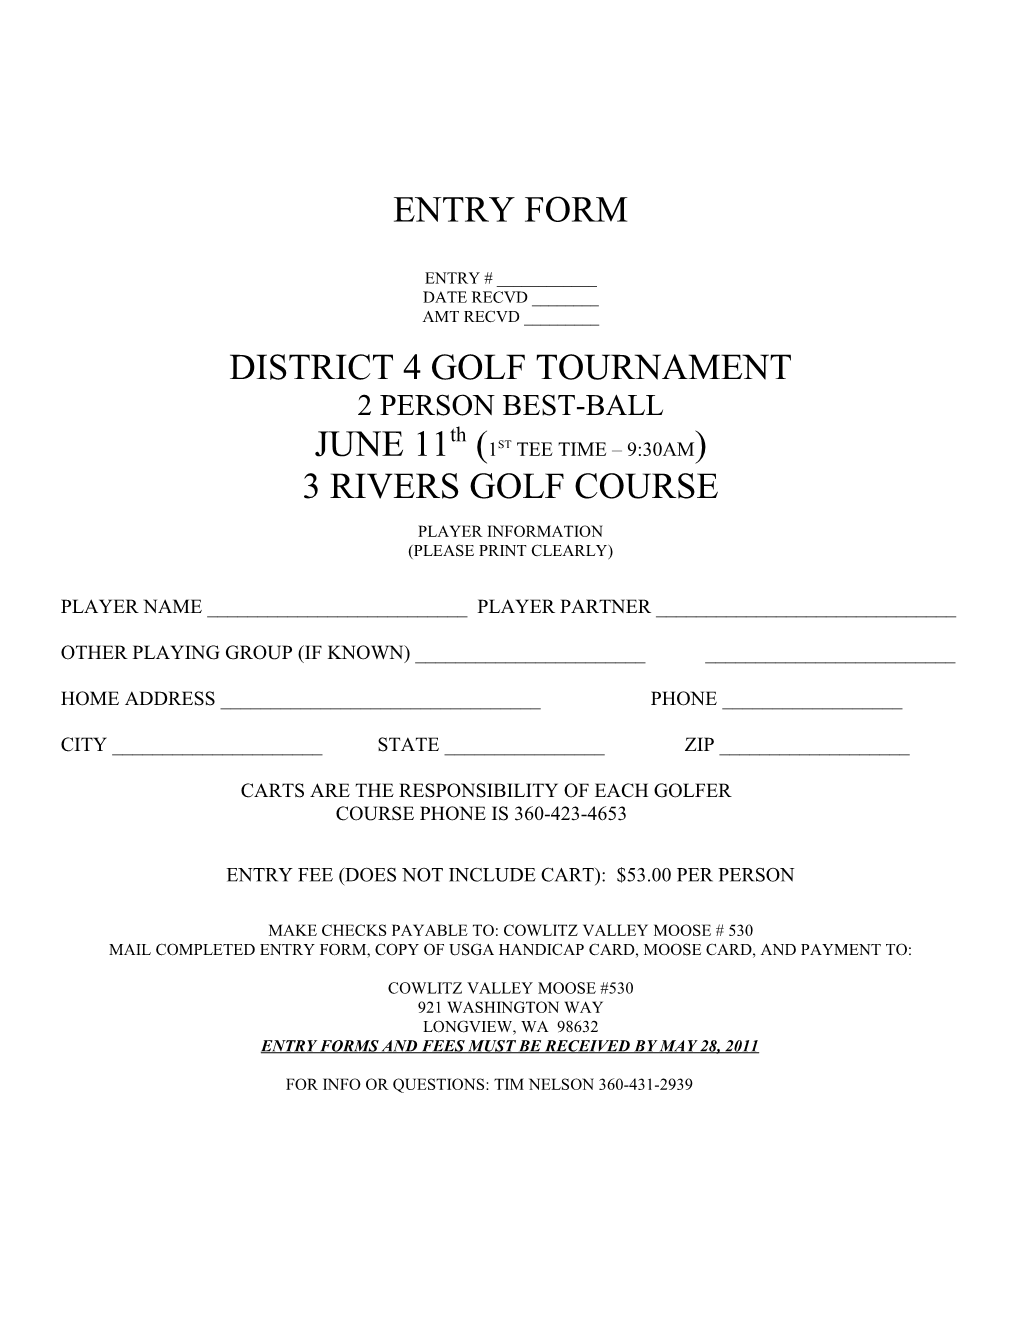 District 4 Golf Tournament